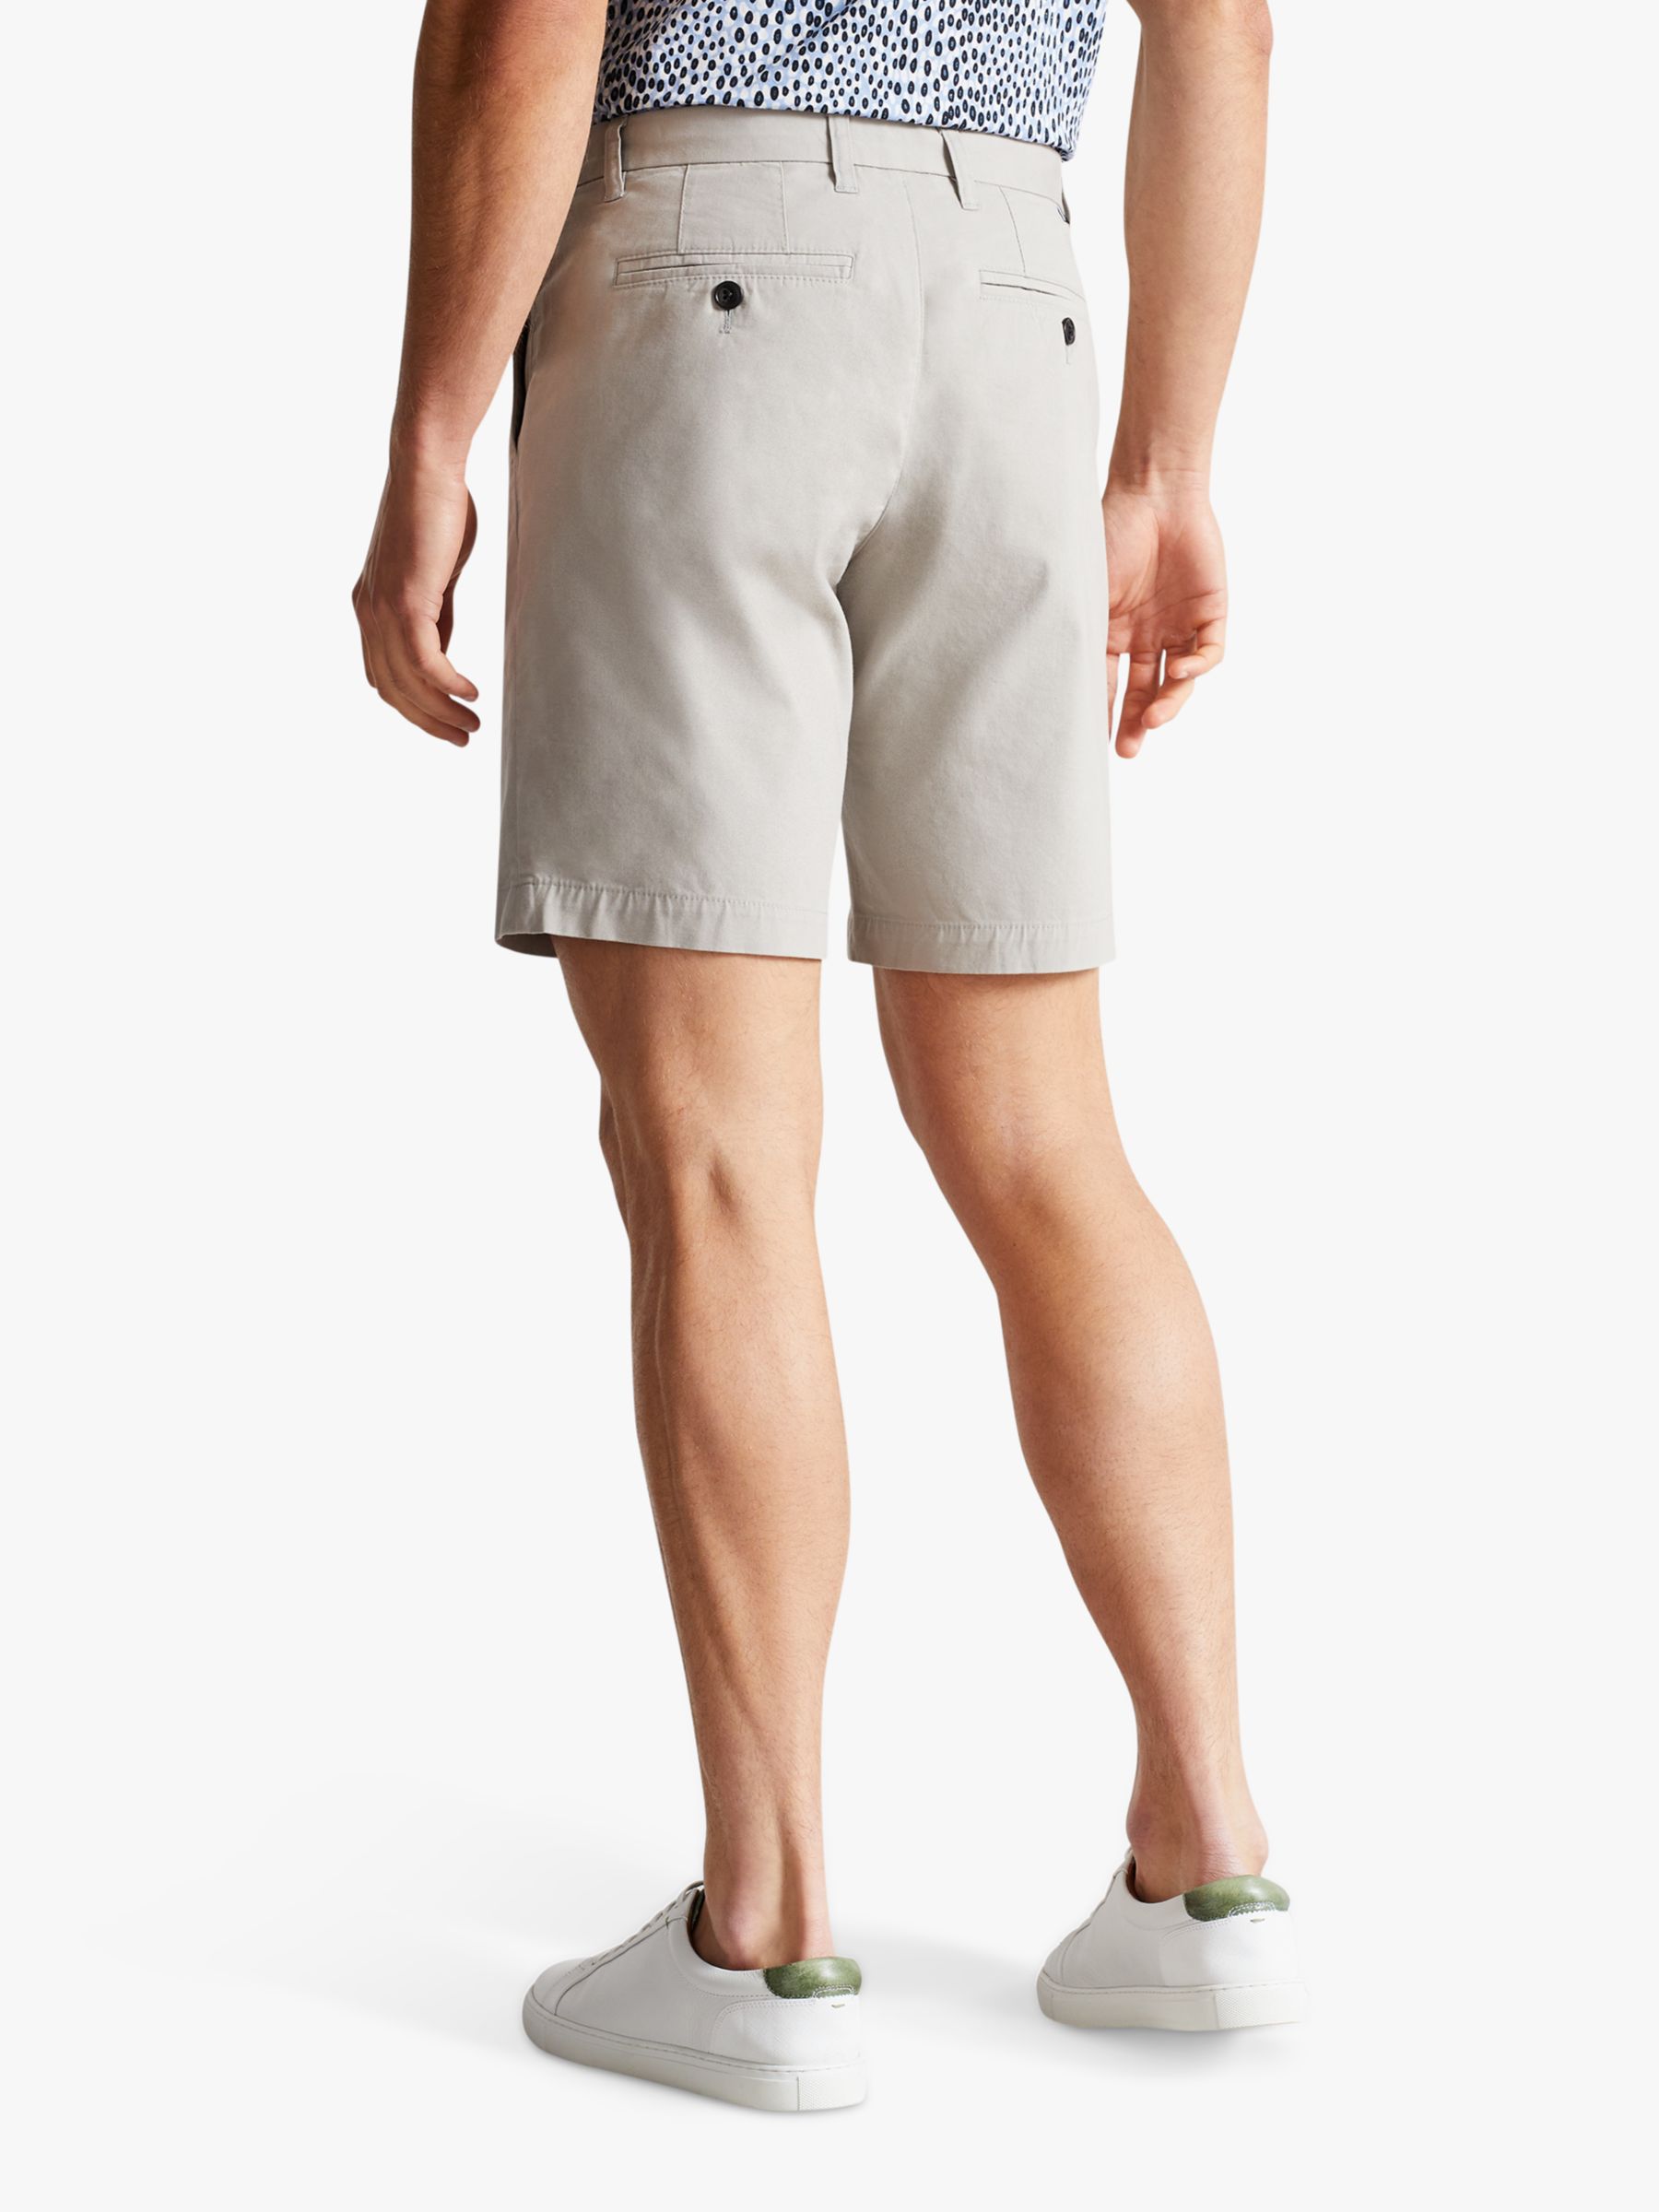 Ted Baker Ashfrd Chino Shorts, Light Grey, 34R